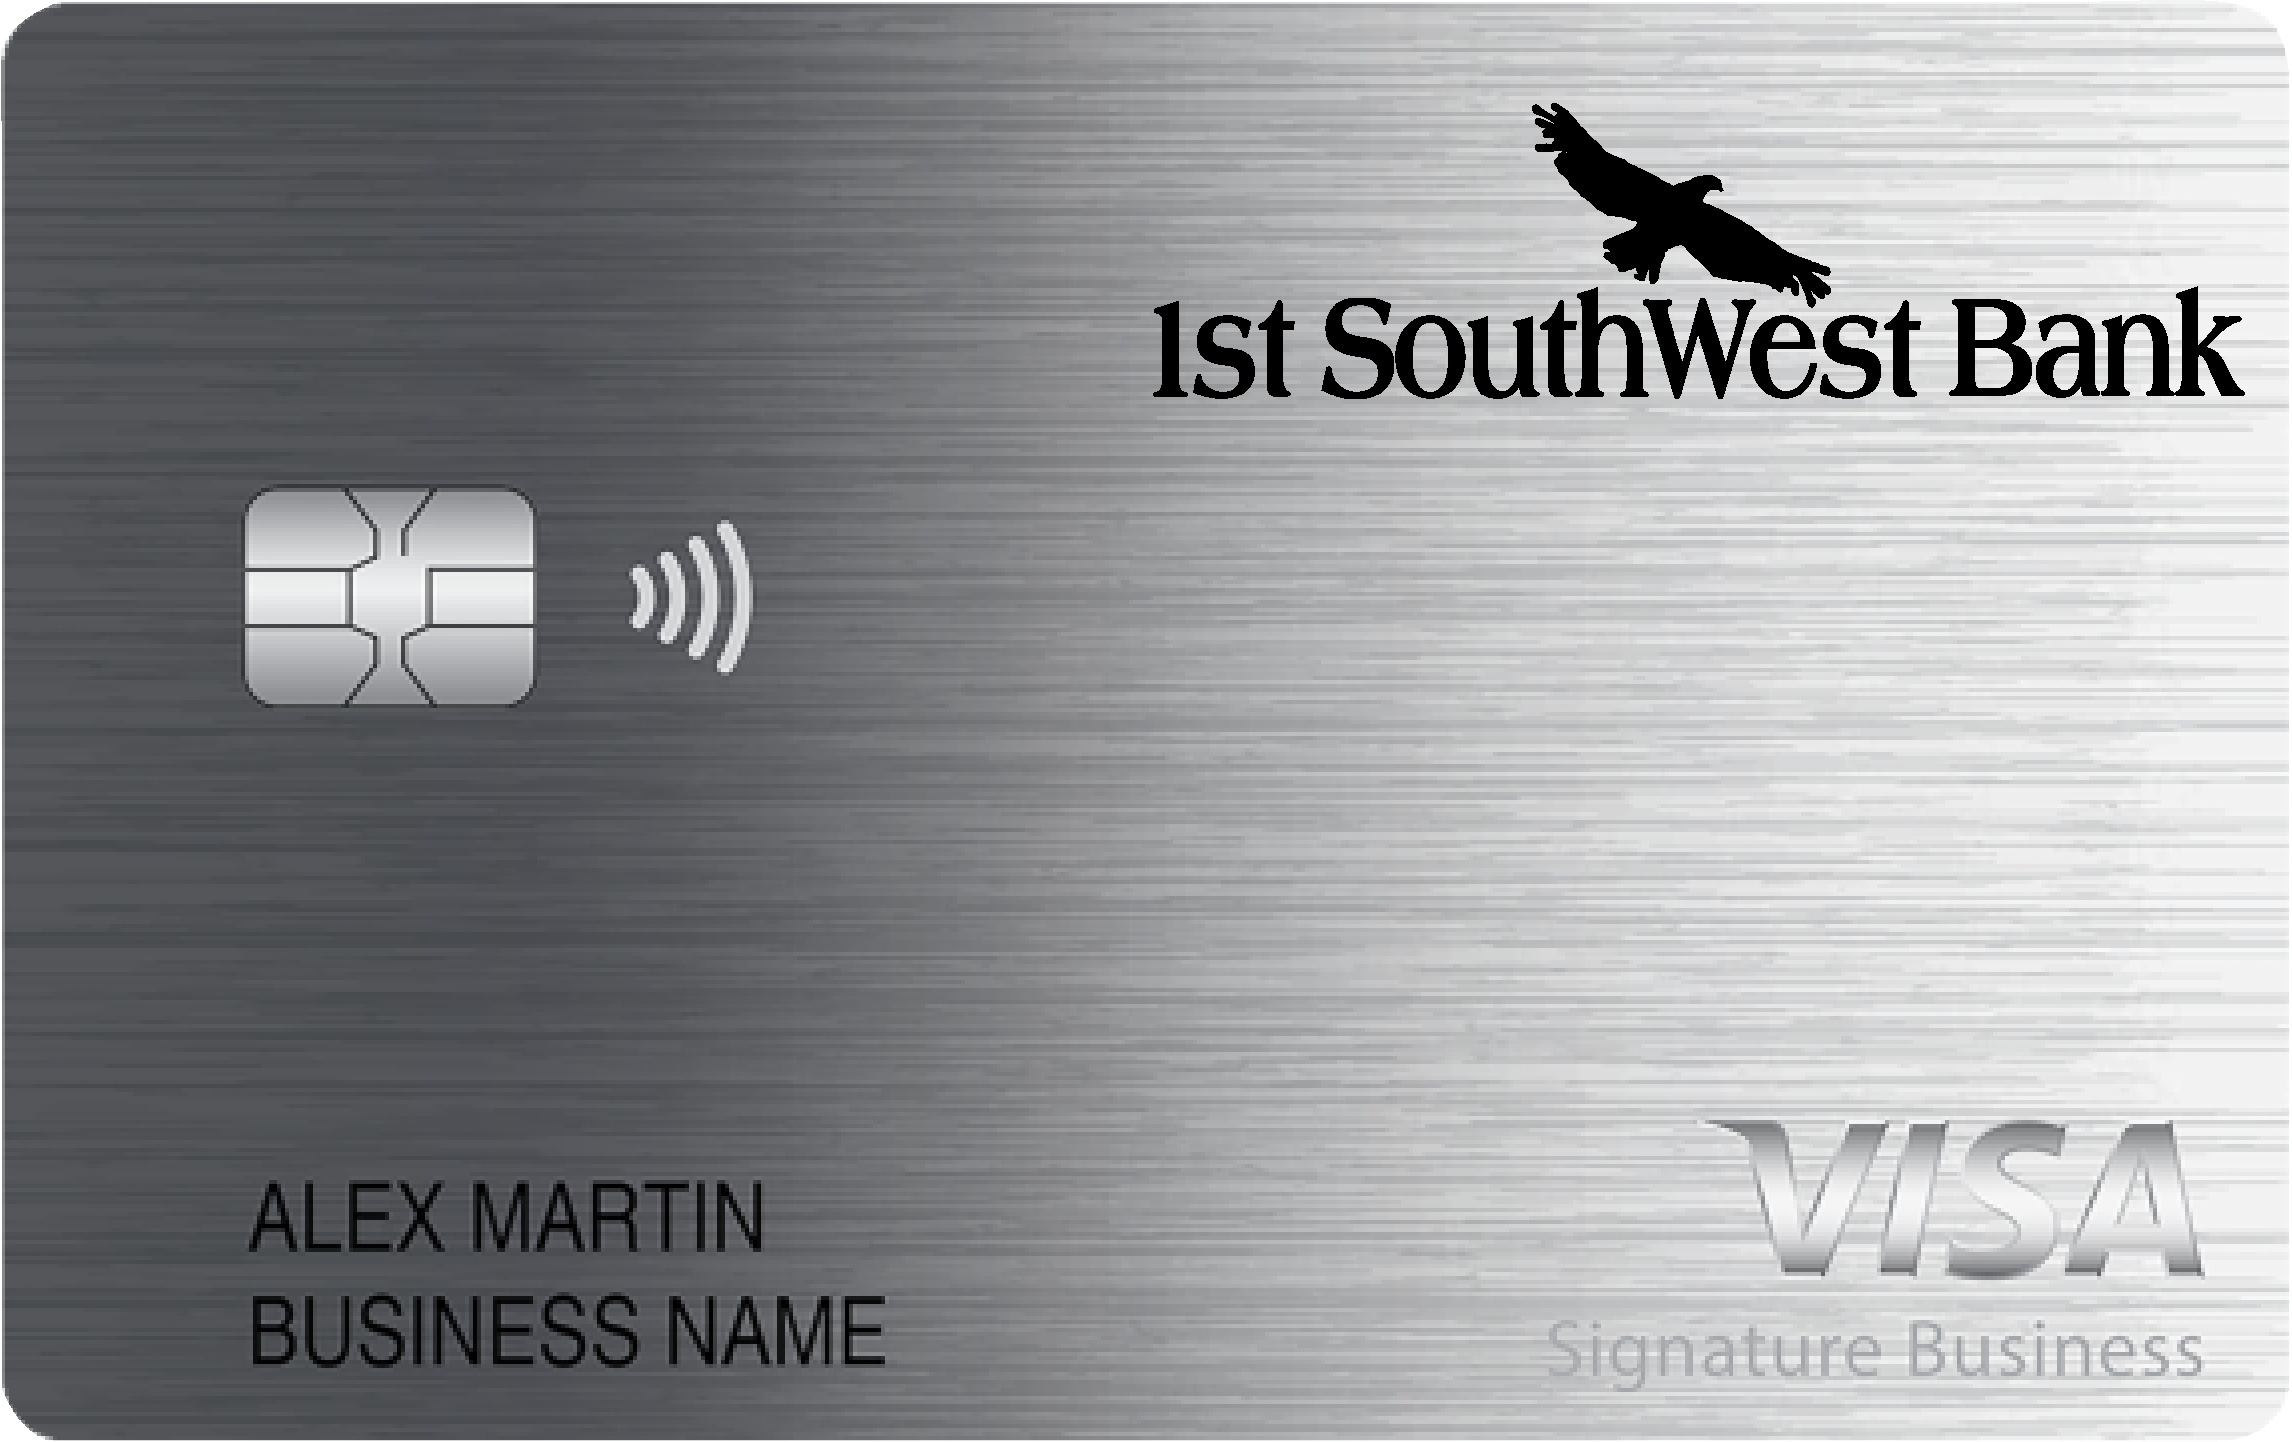 First Southwest Bank Smart Business Rewards Card